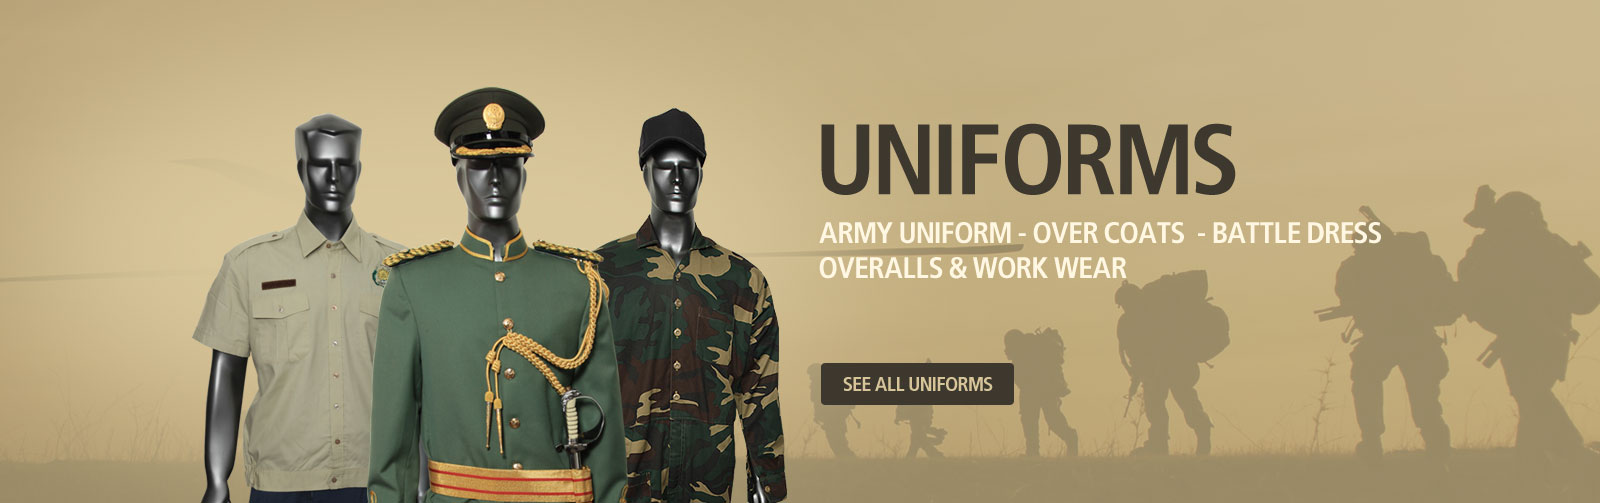 Army Uniforms India